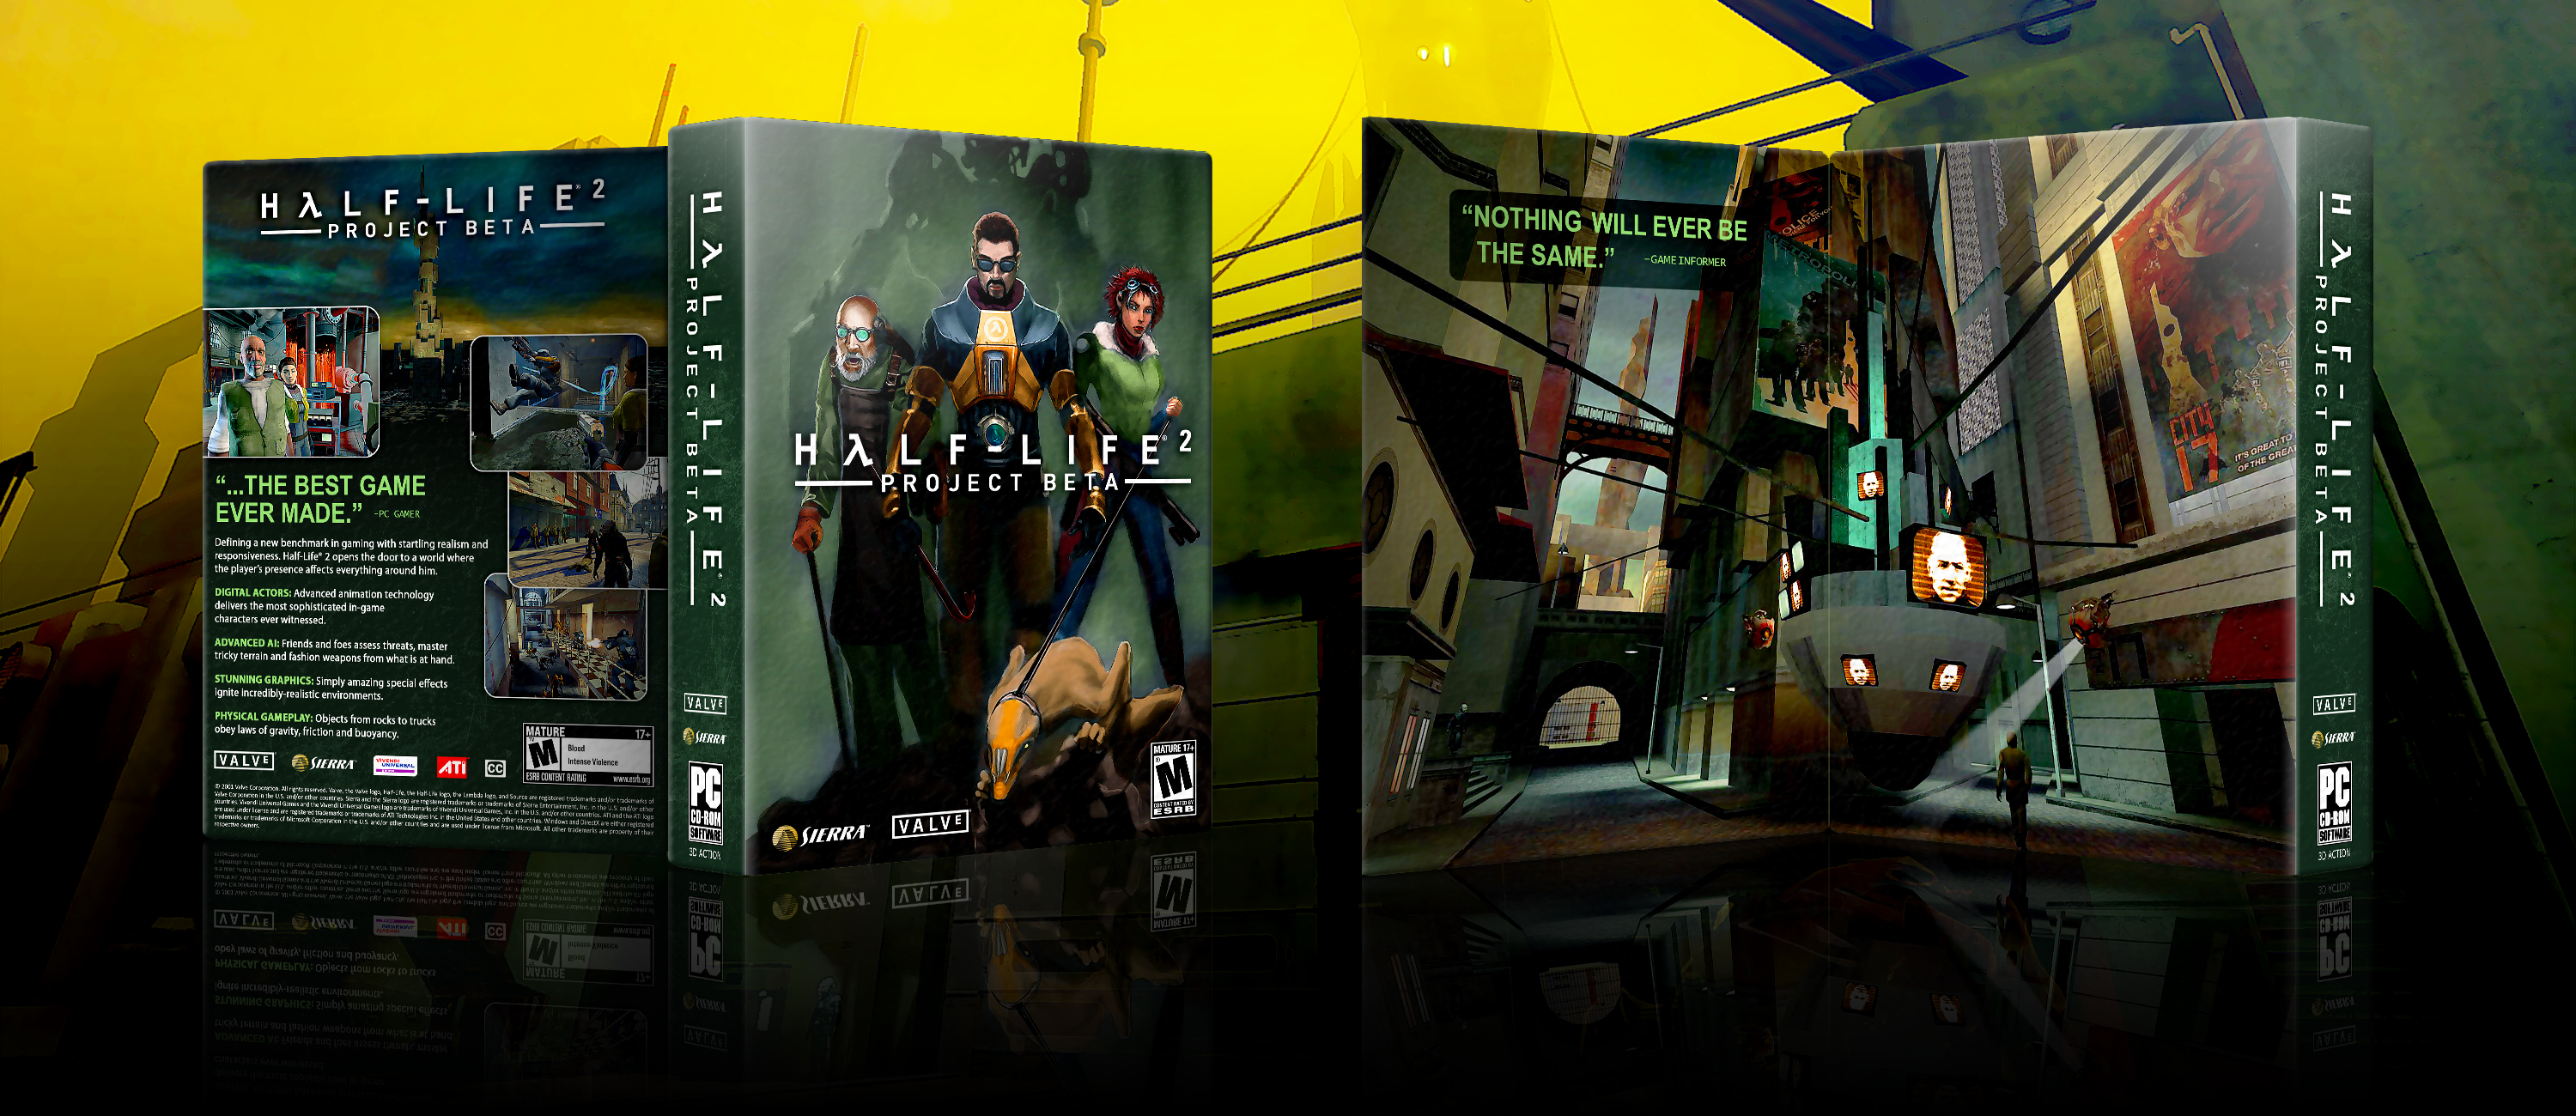 Half-Life 2: Project Beta box cover